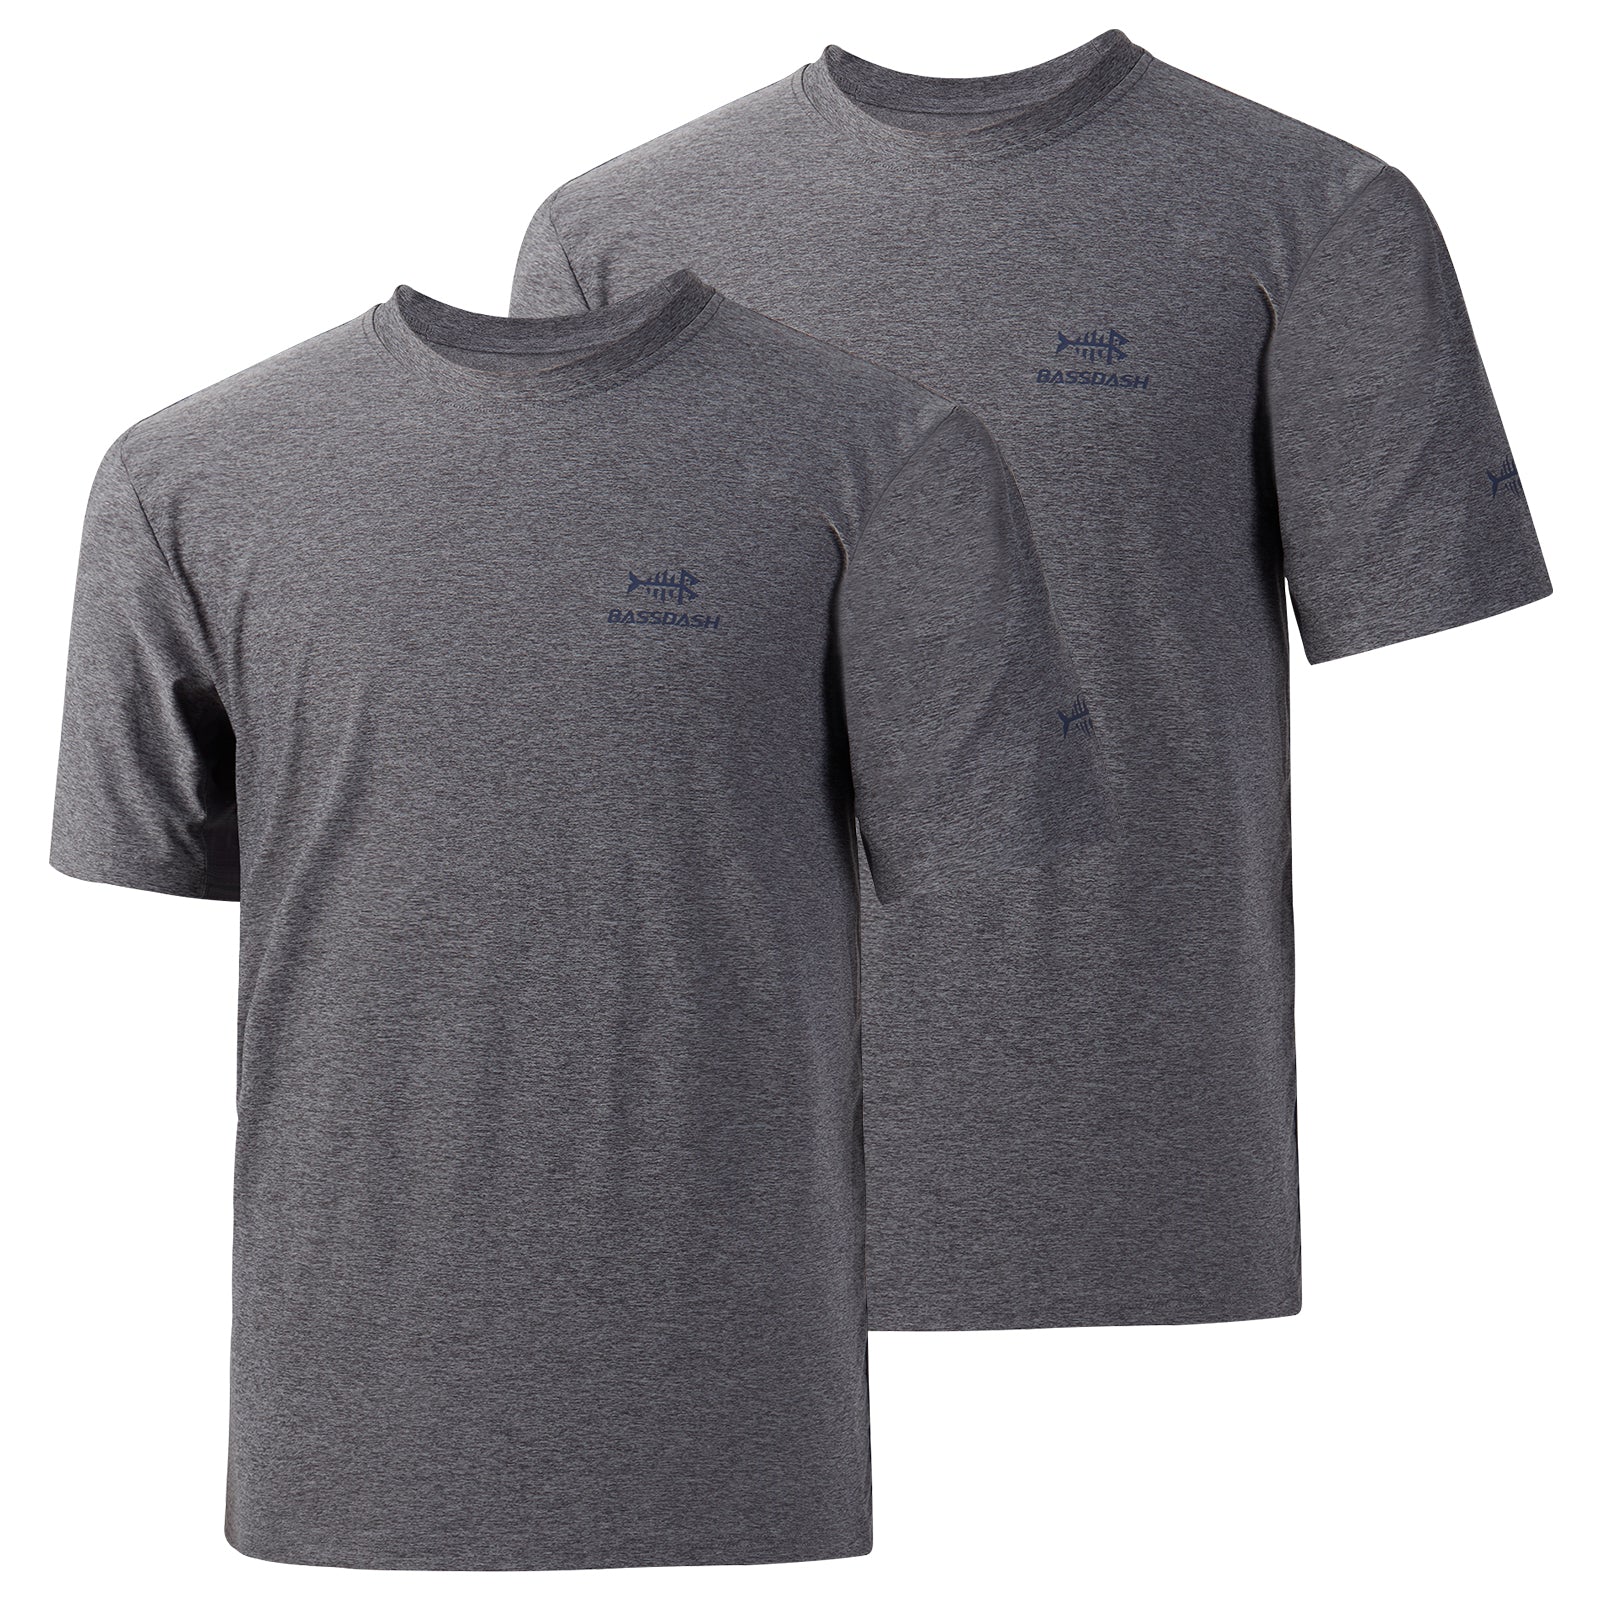 Bassdash Men\'s UPF 50+ Performance Fishing T-Shirt Quick Dry Short Sleeve  Active Shirt